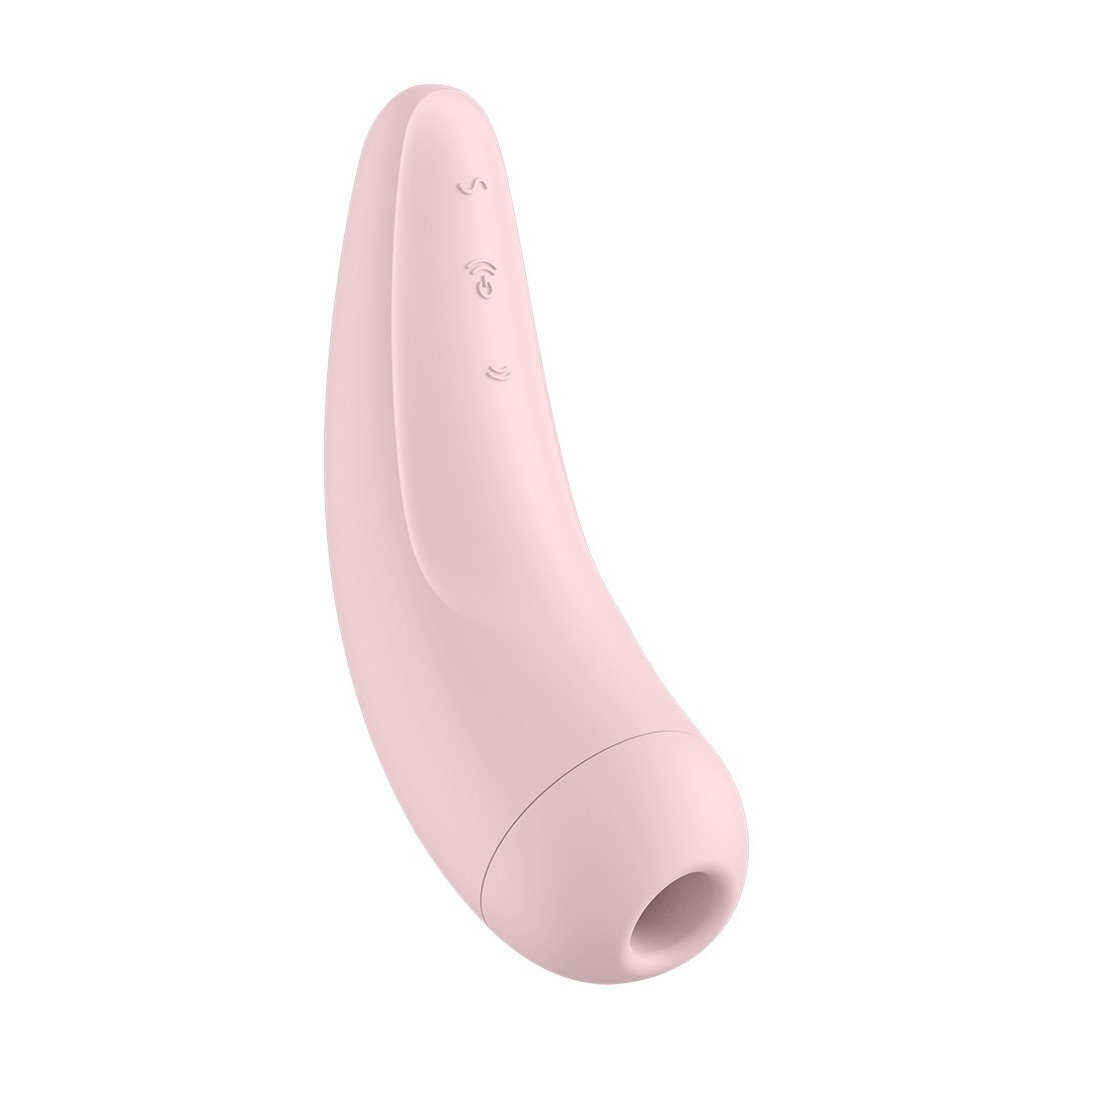 Satisfyer - Curvy 2+ Air Pulse Stimulator + Vibration - Pink